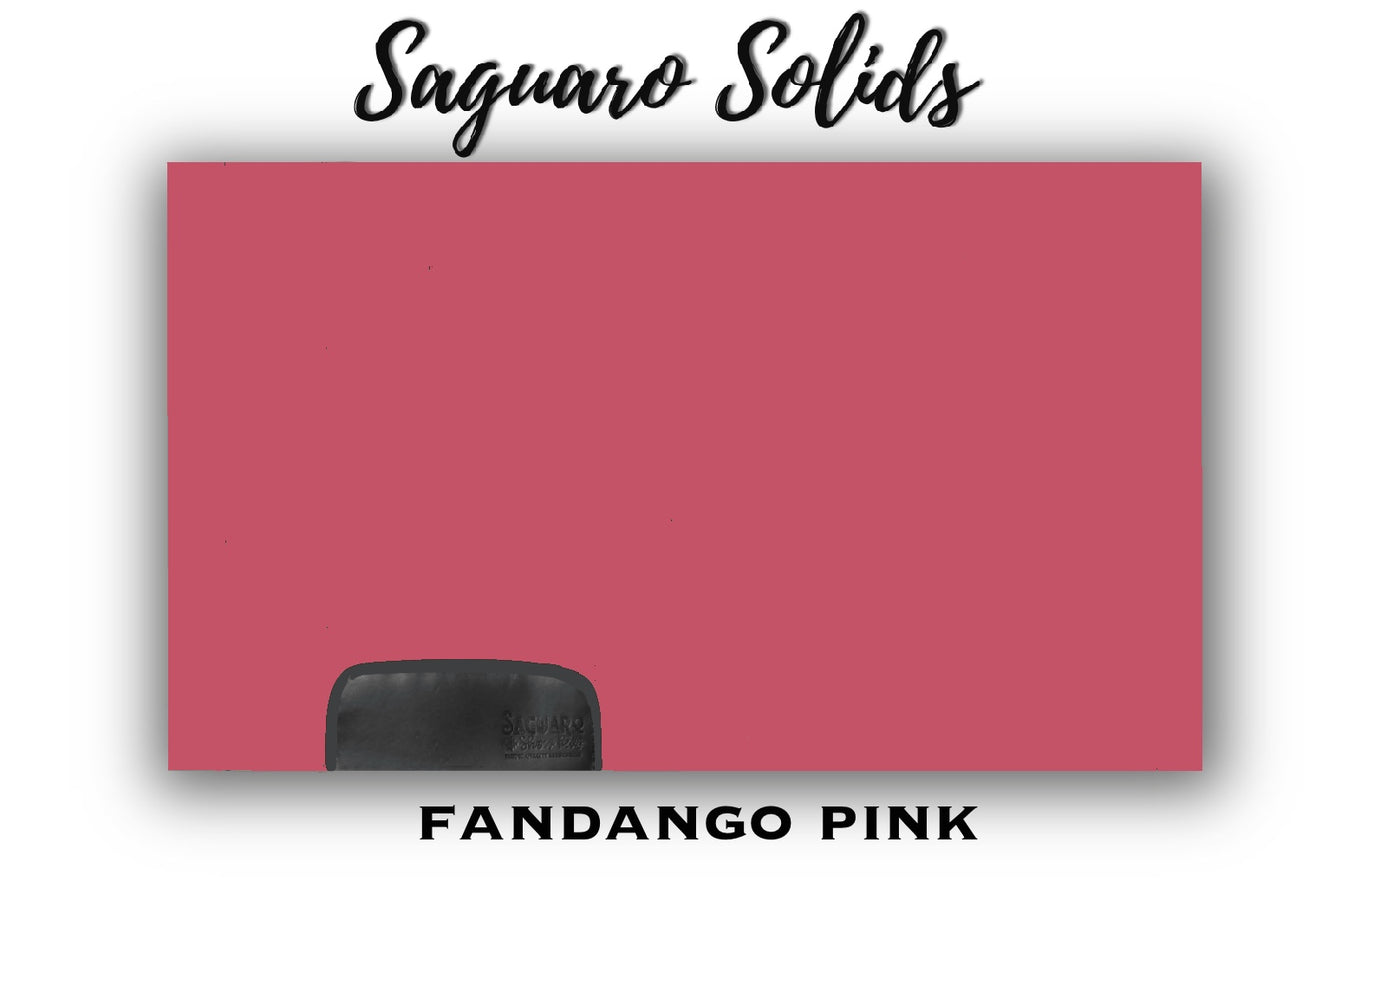 Saguaro Solid "Fandango Pink" Show Pad (SEMI-CUSTOM)